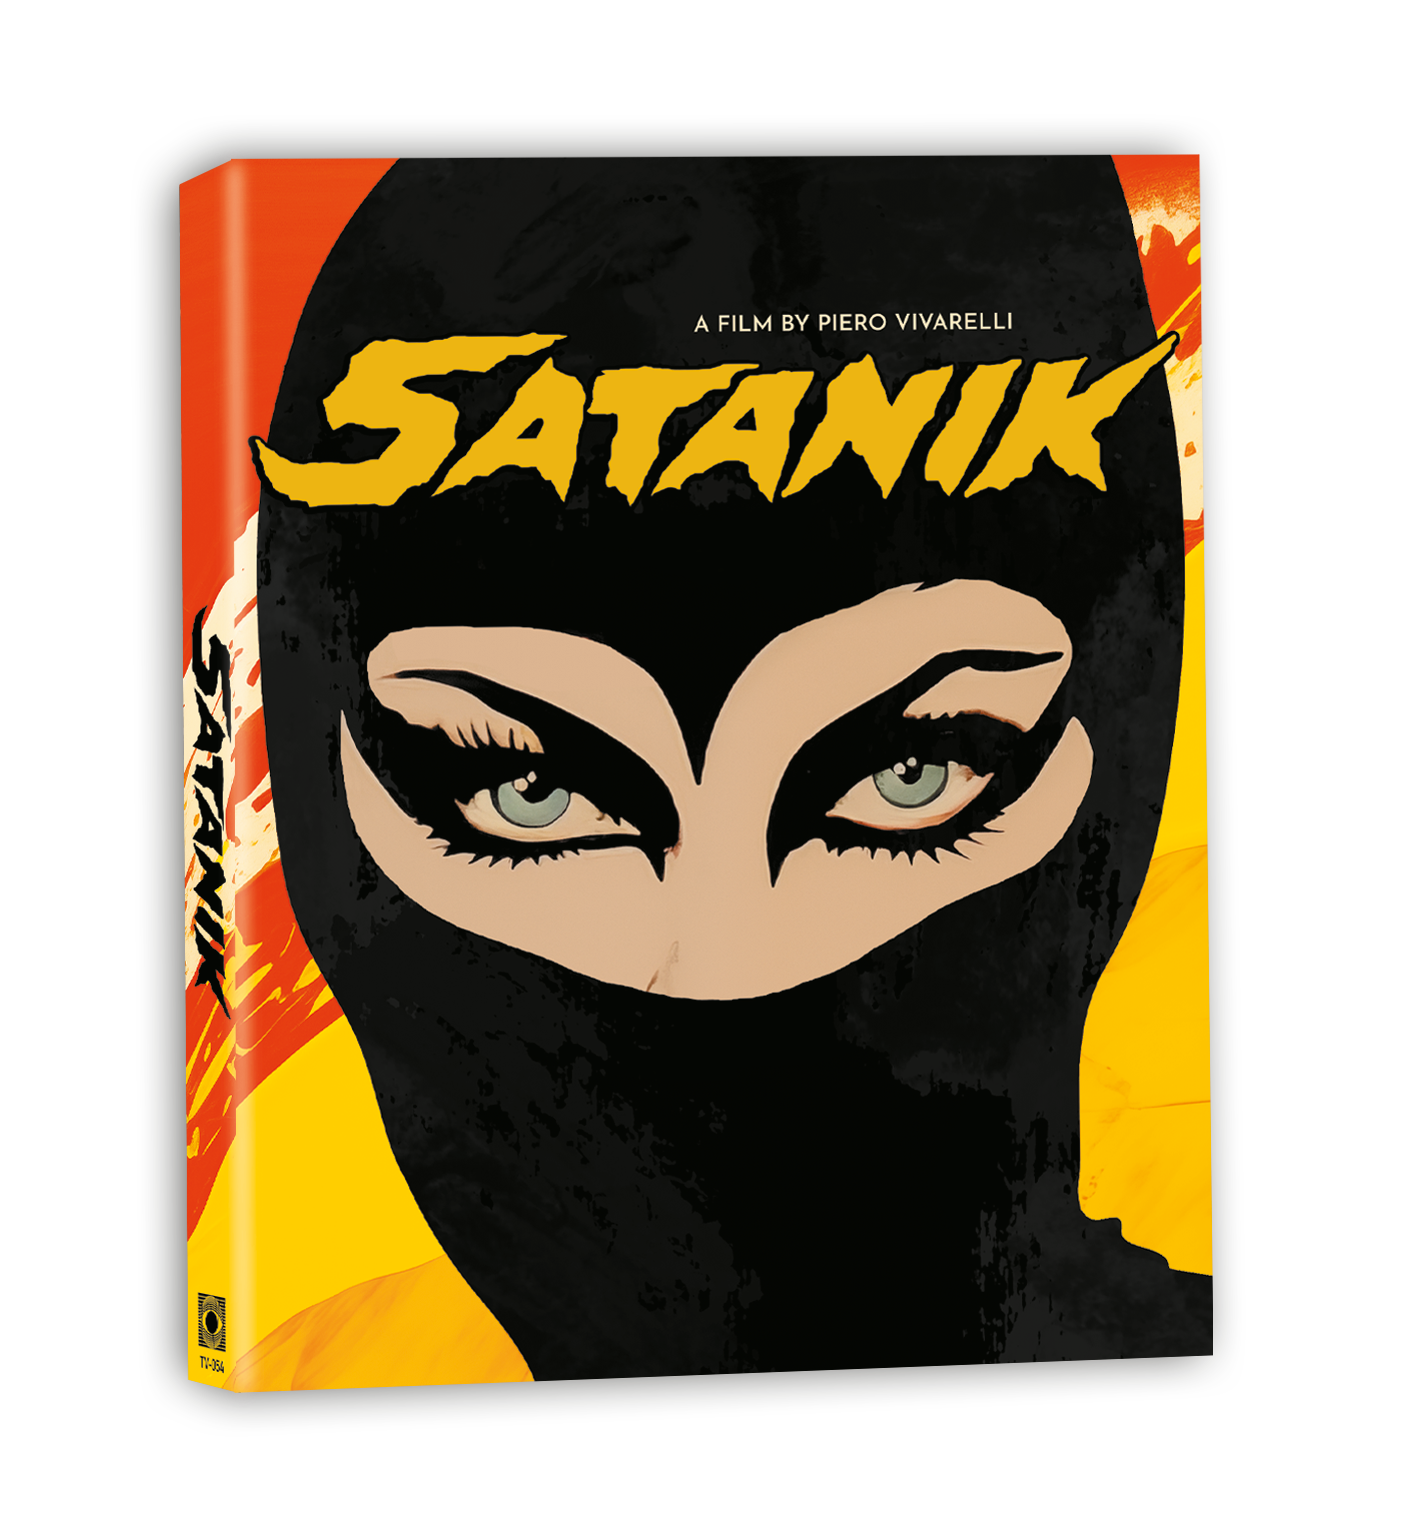 Satanik (1968) blu-ray with slipcover